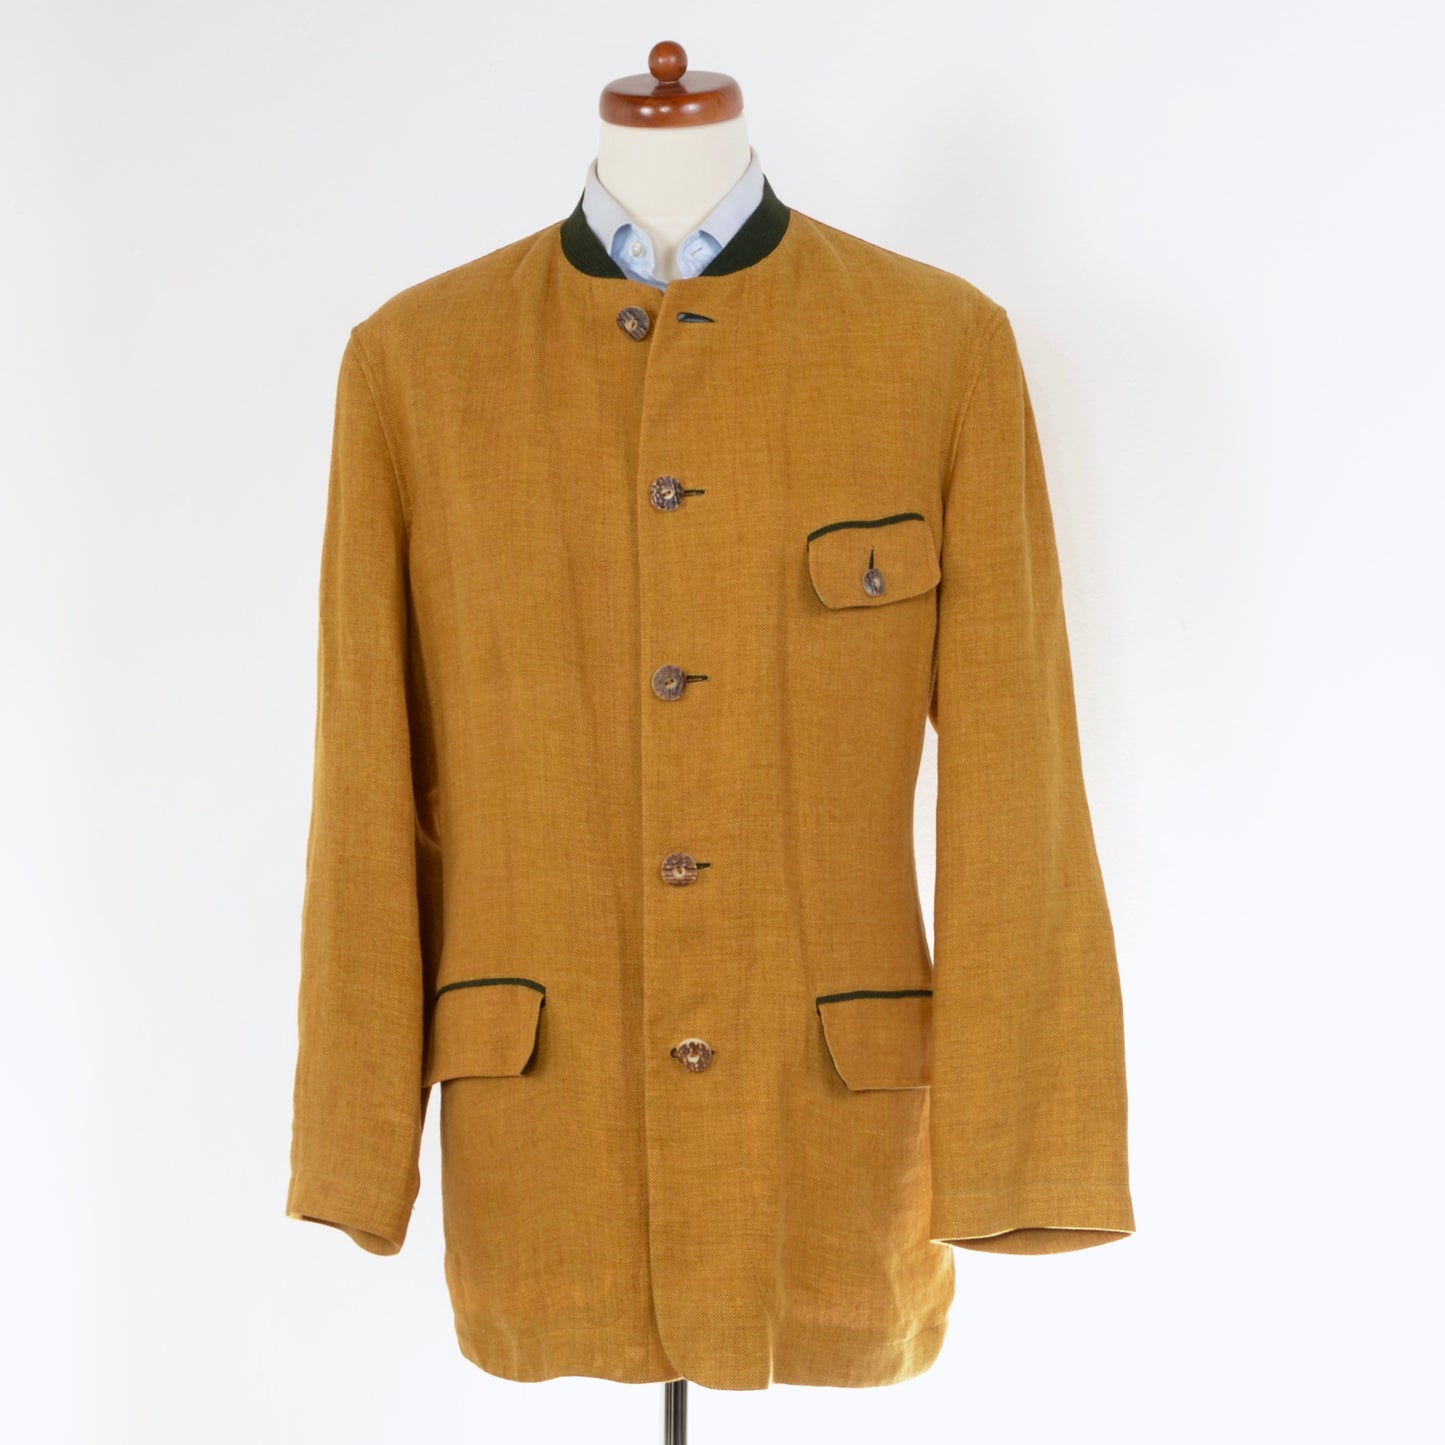 Habsburg Janker/Jacket Size 54 - Ochre